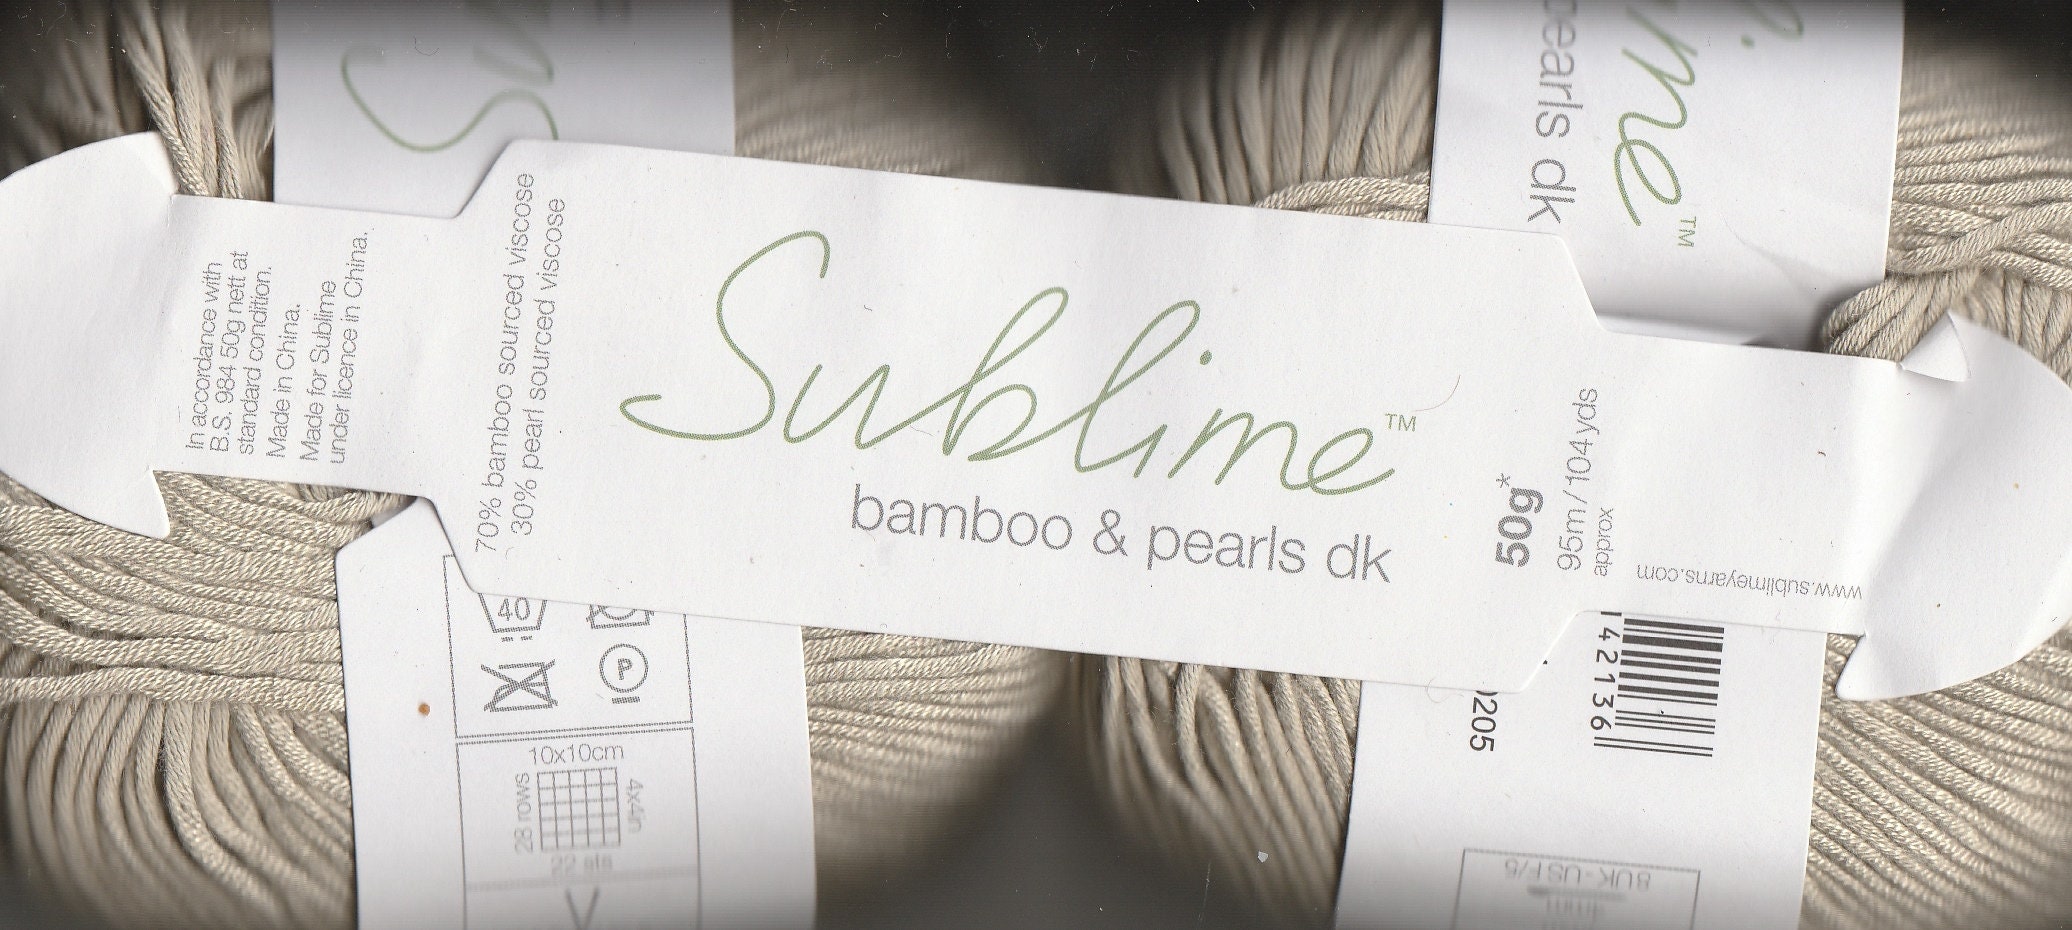 Patons Silk Bamboo Yarn 1.8oz • Green • 70% Bamboo 30% Silk 3-DK/Light  Worsted